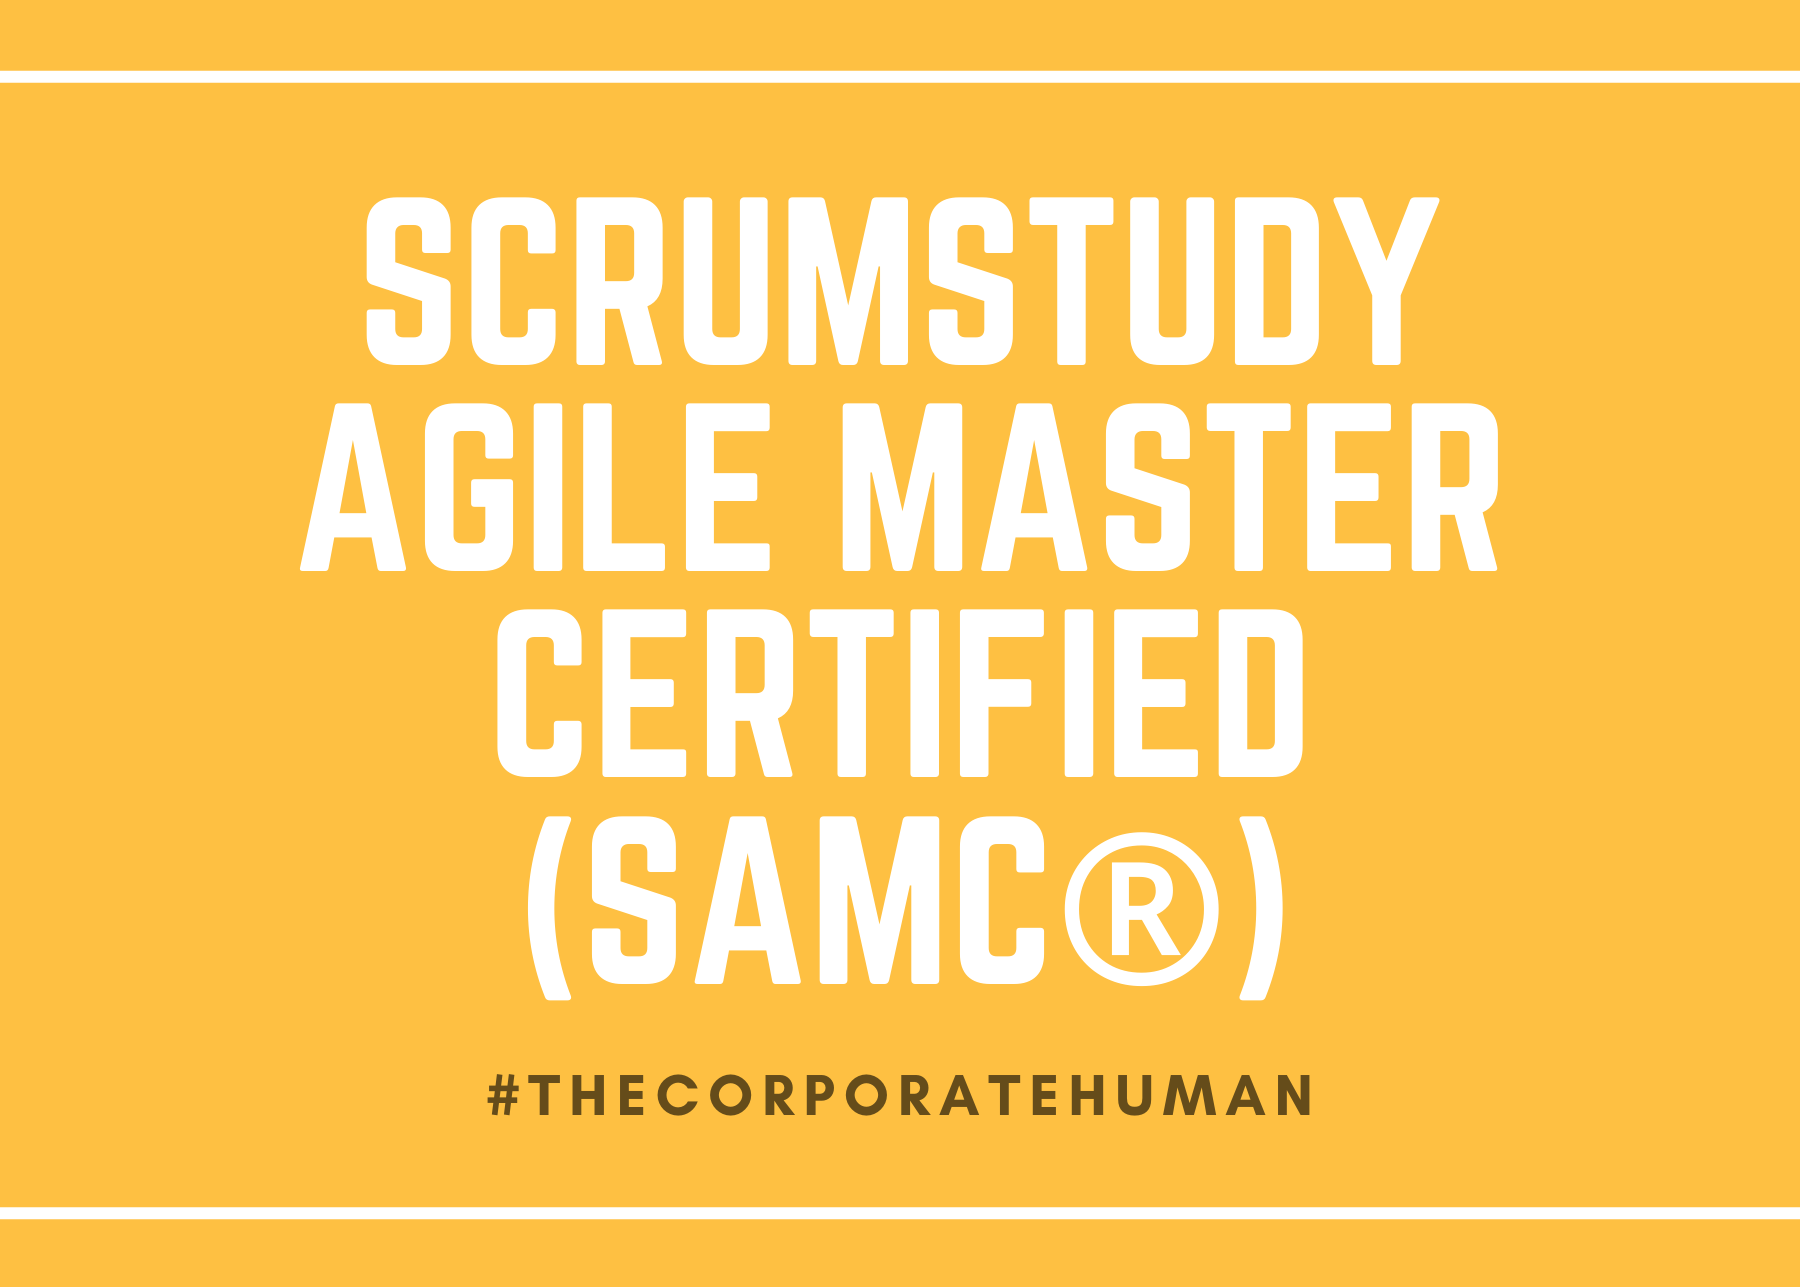 SCRUMStudy Agile Master Certified (SAMC®)